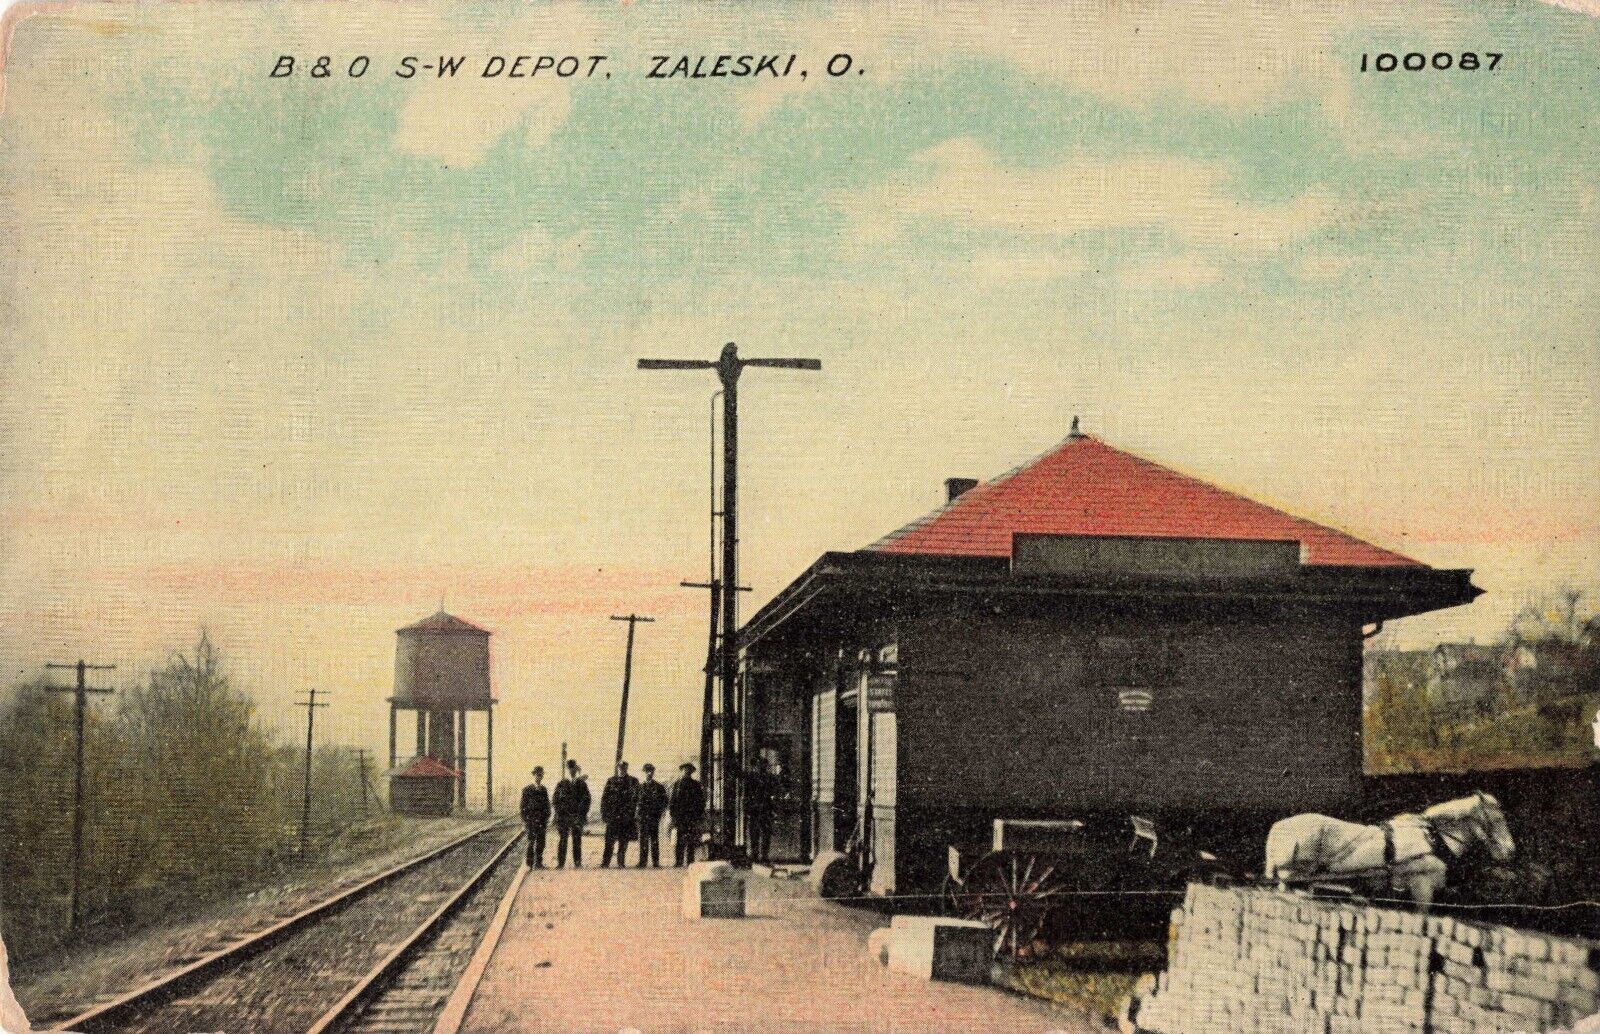 B & O Southwest Railroad Depot Zaleski Ohio OH c1910 Postcard